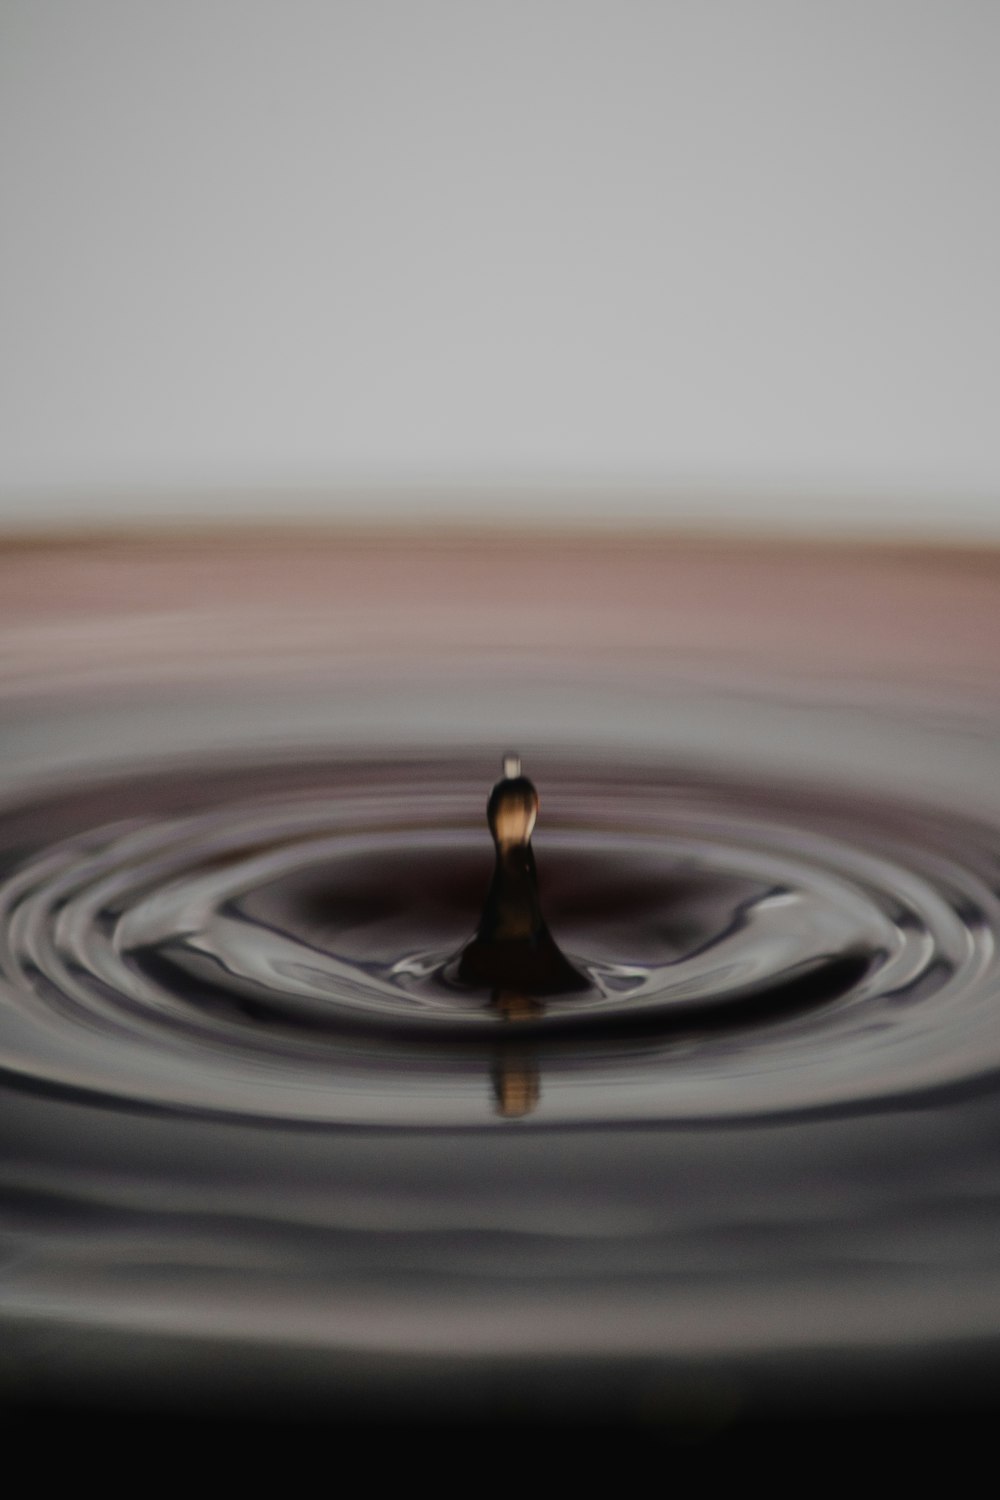 water drop in macro lens